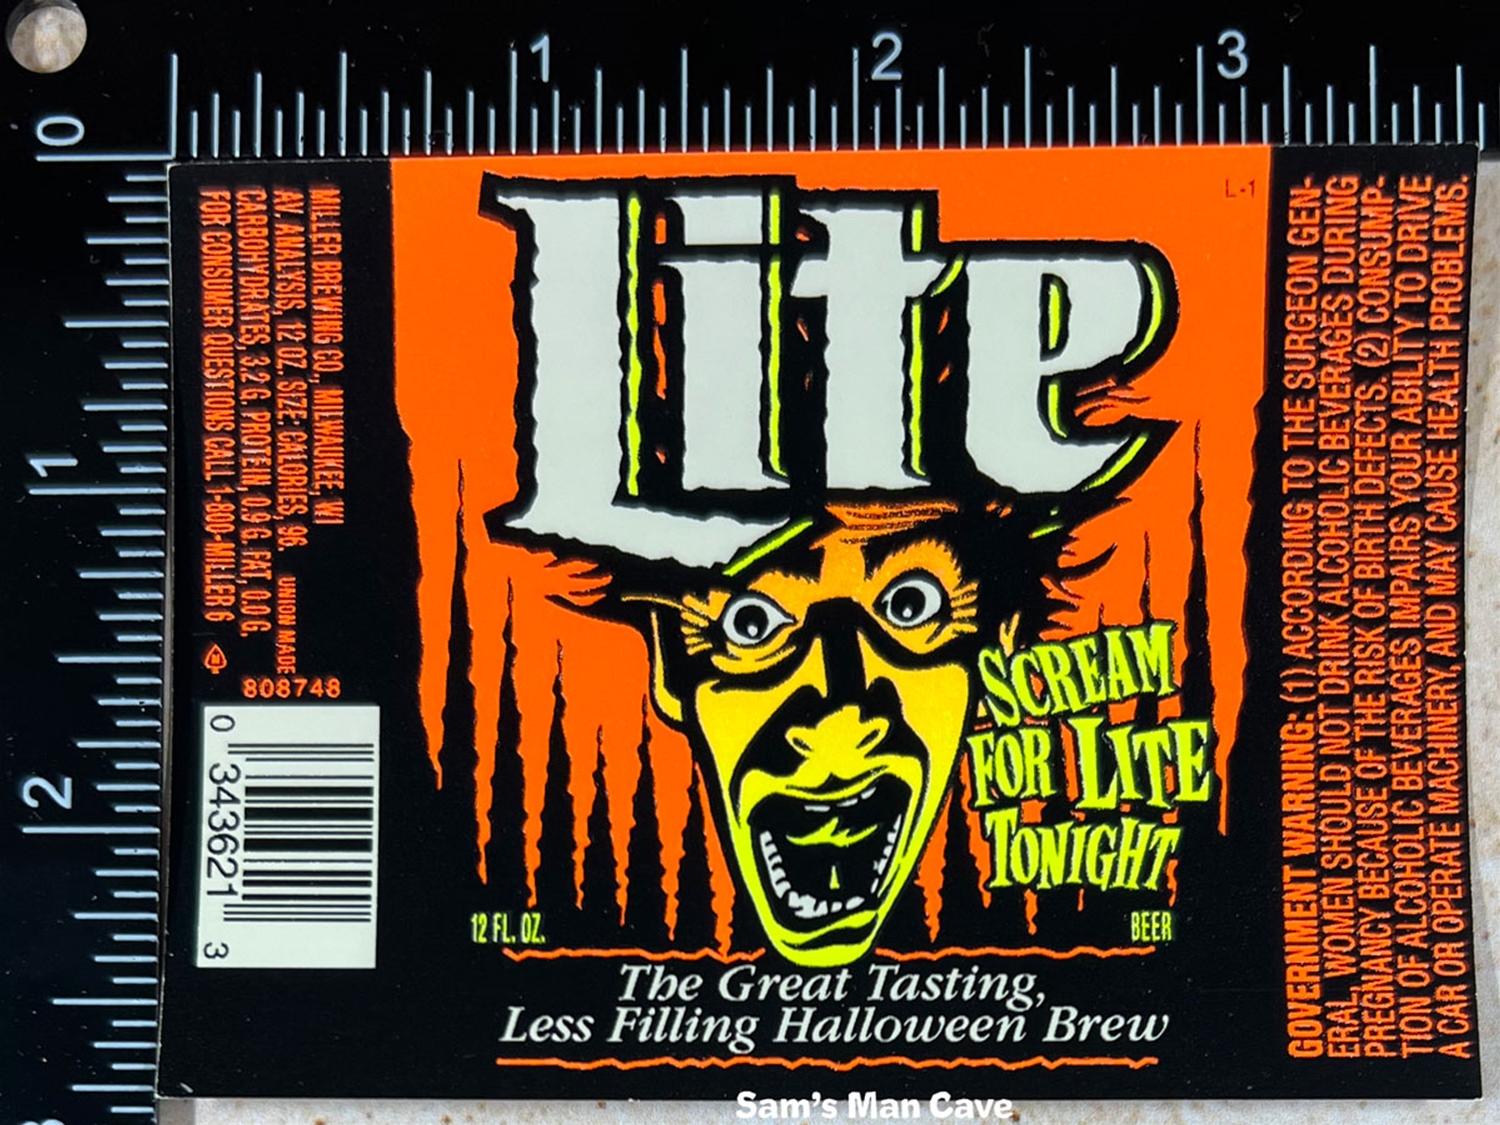 Lite Scream for Lite Tonight Label